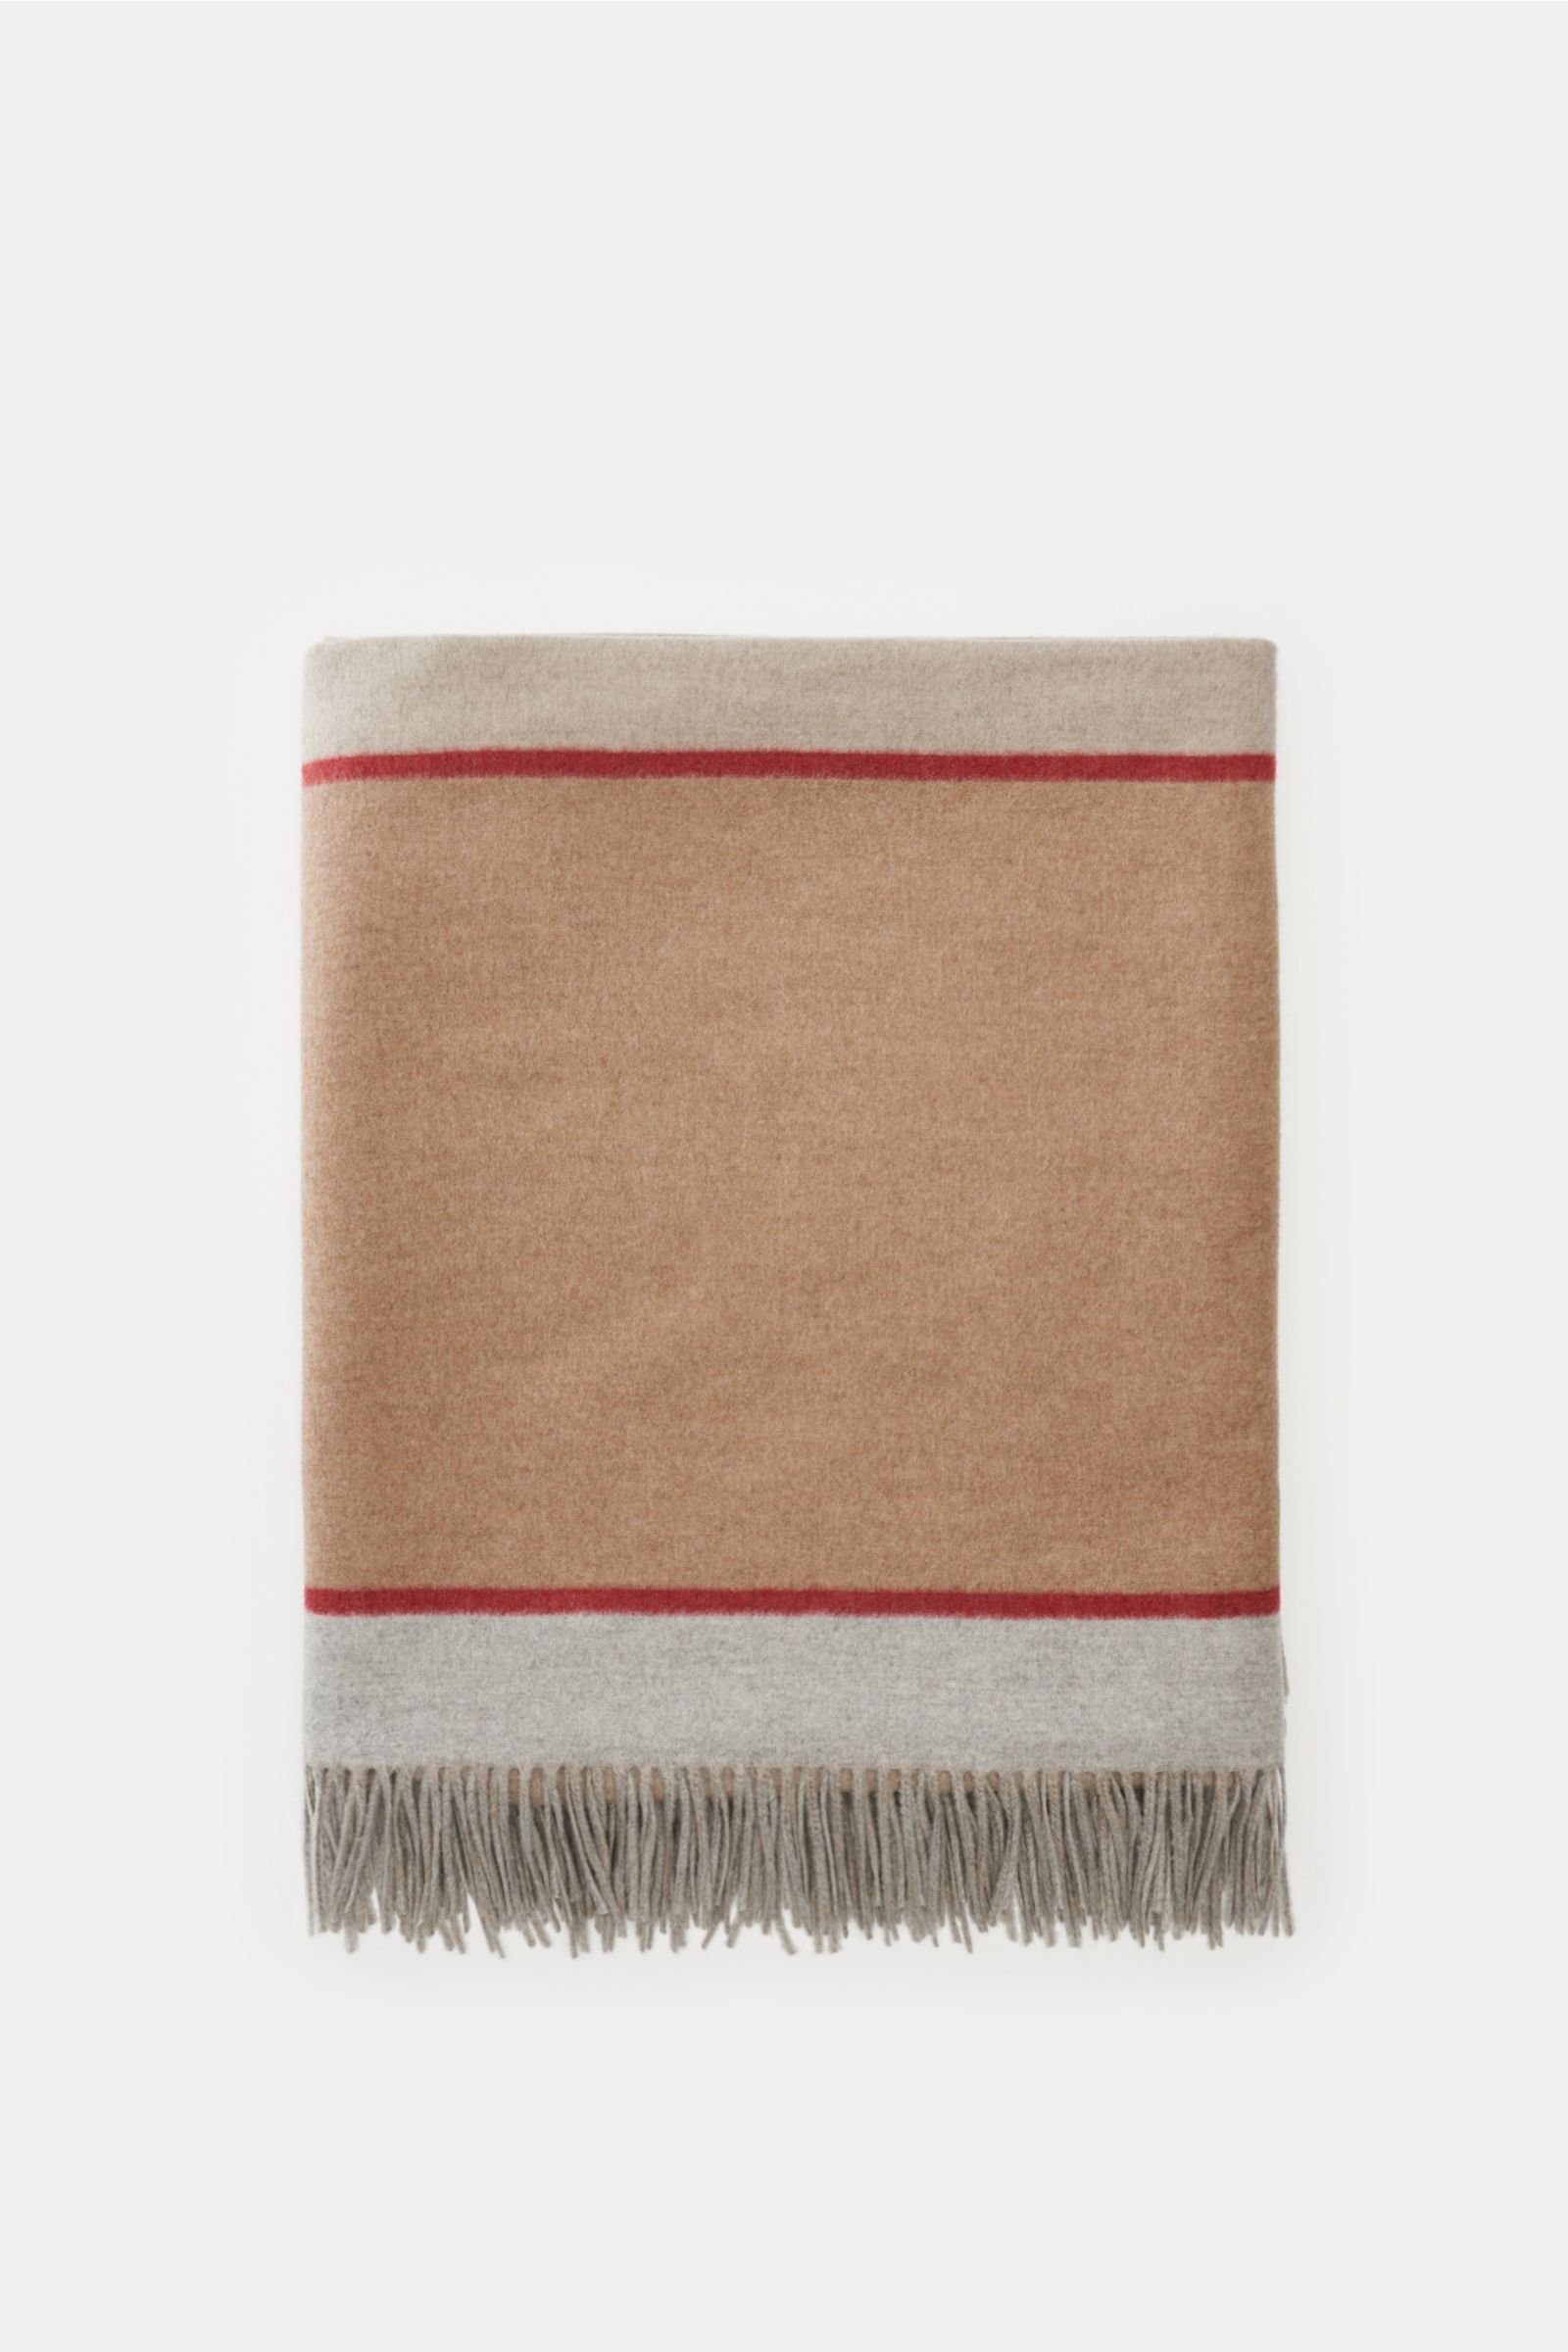 Silk scarf grey-brown/light brown